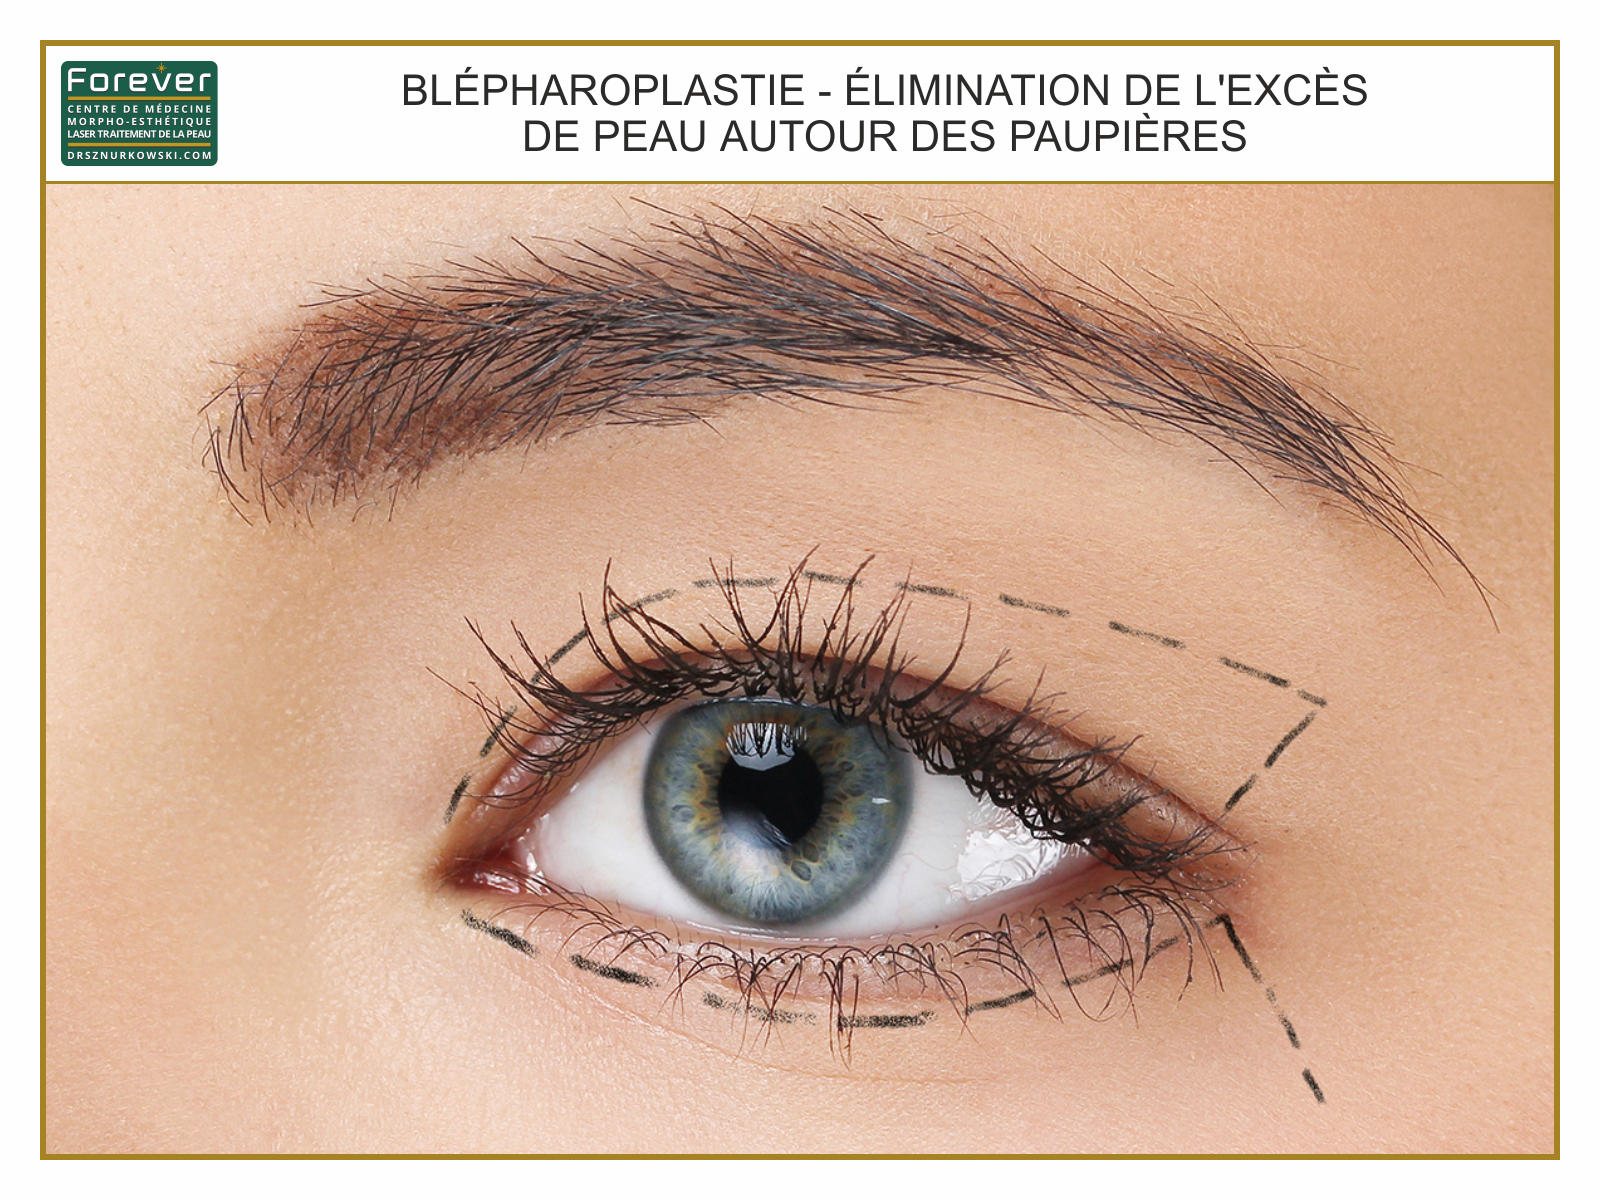 Blepharoplasty - Removing The Excess of Limp Skin From Eyelids 2 (80x60) FR.jpg